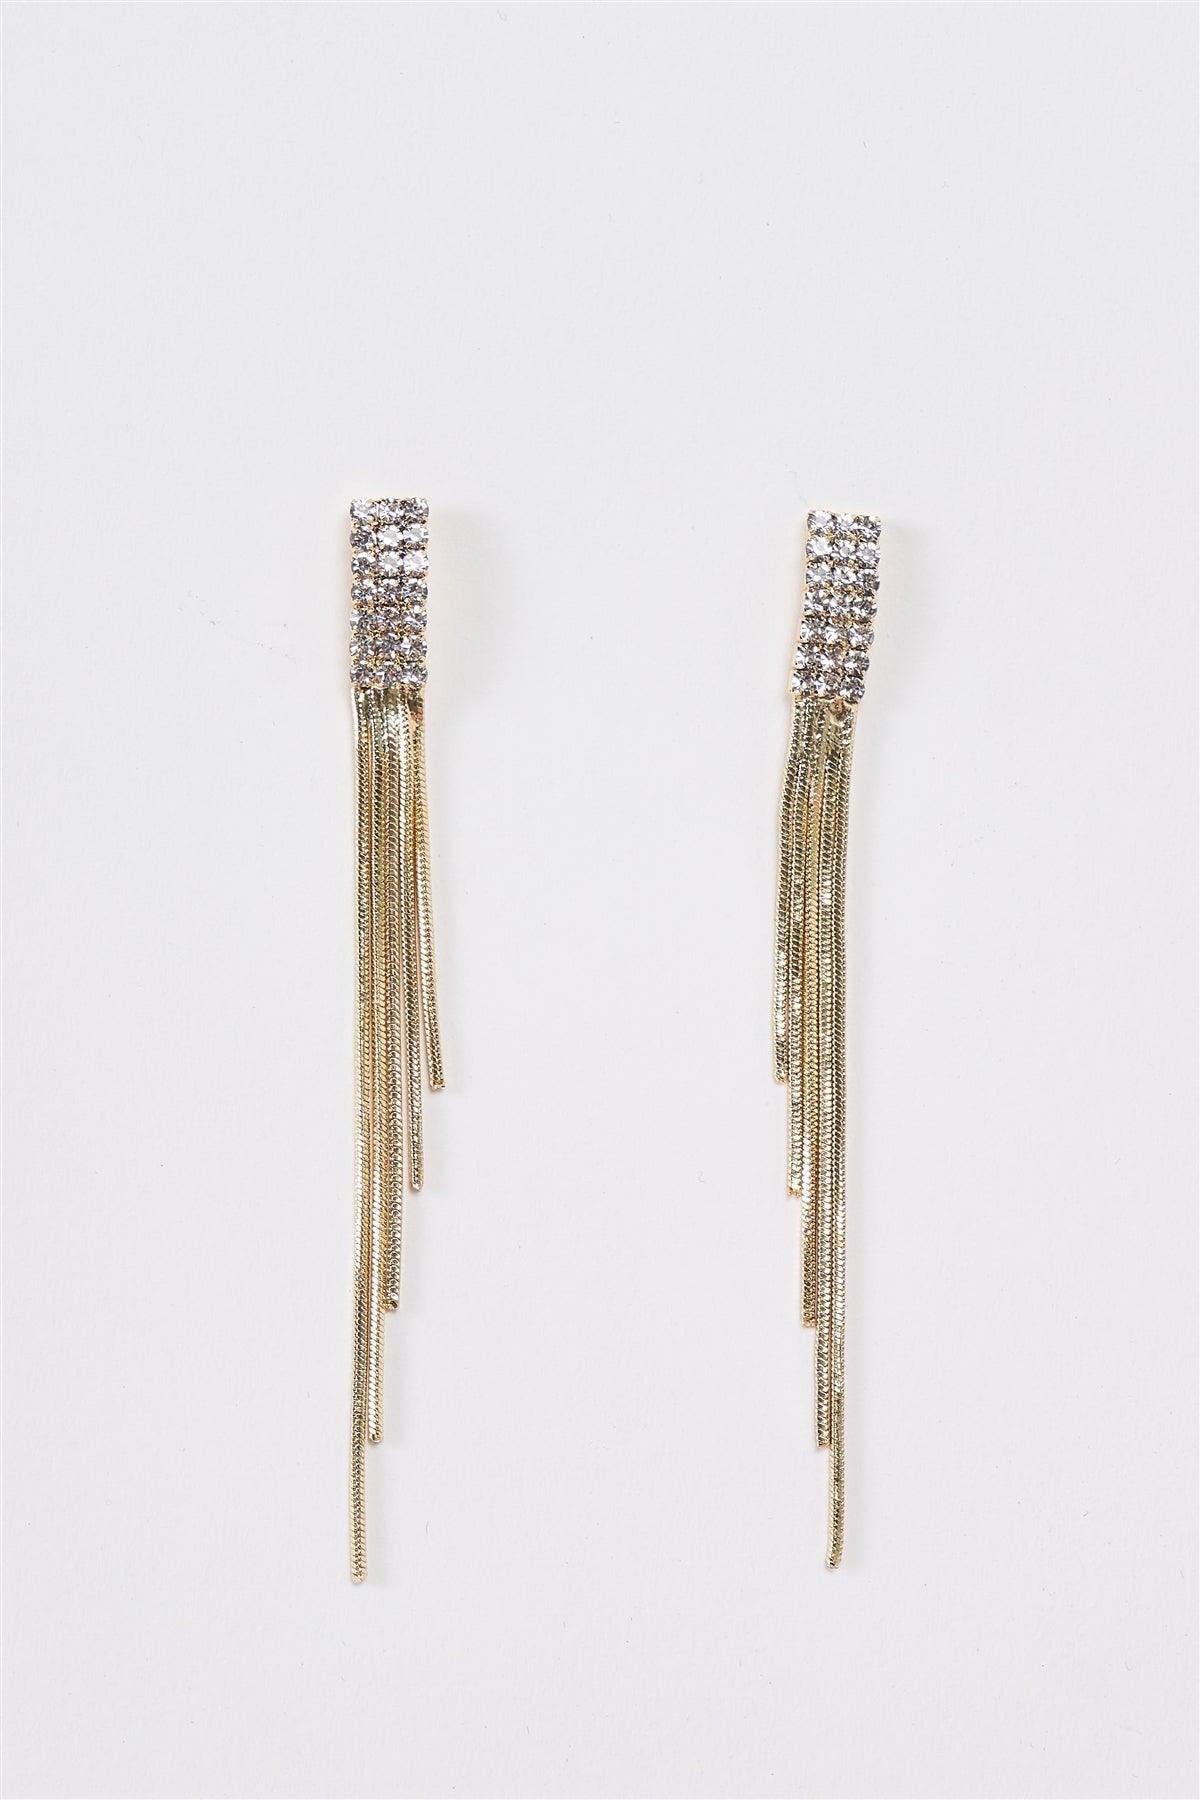 Gold Faux Diamonds Incrustation Uneven Snake Chain Tassel Drop Earrings /3 Pairs